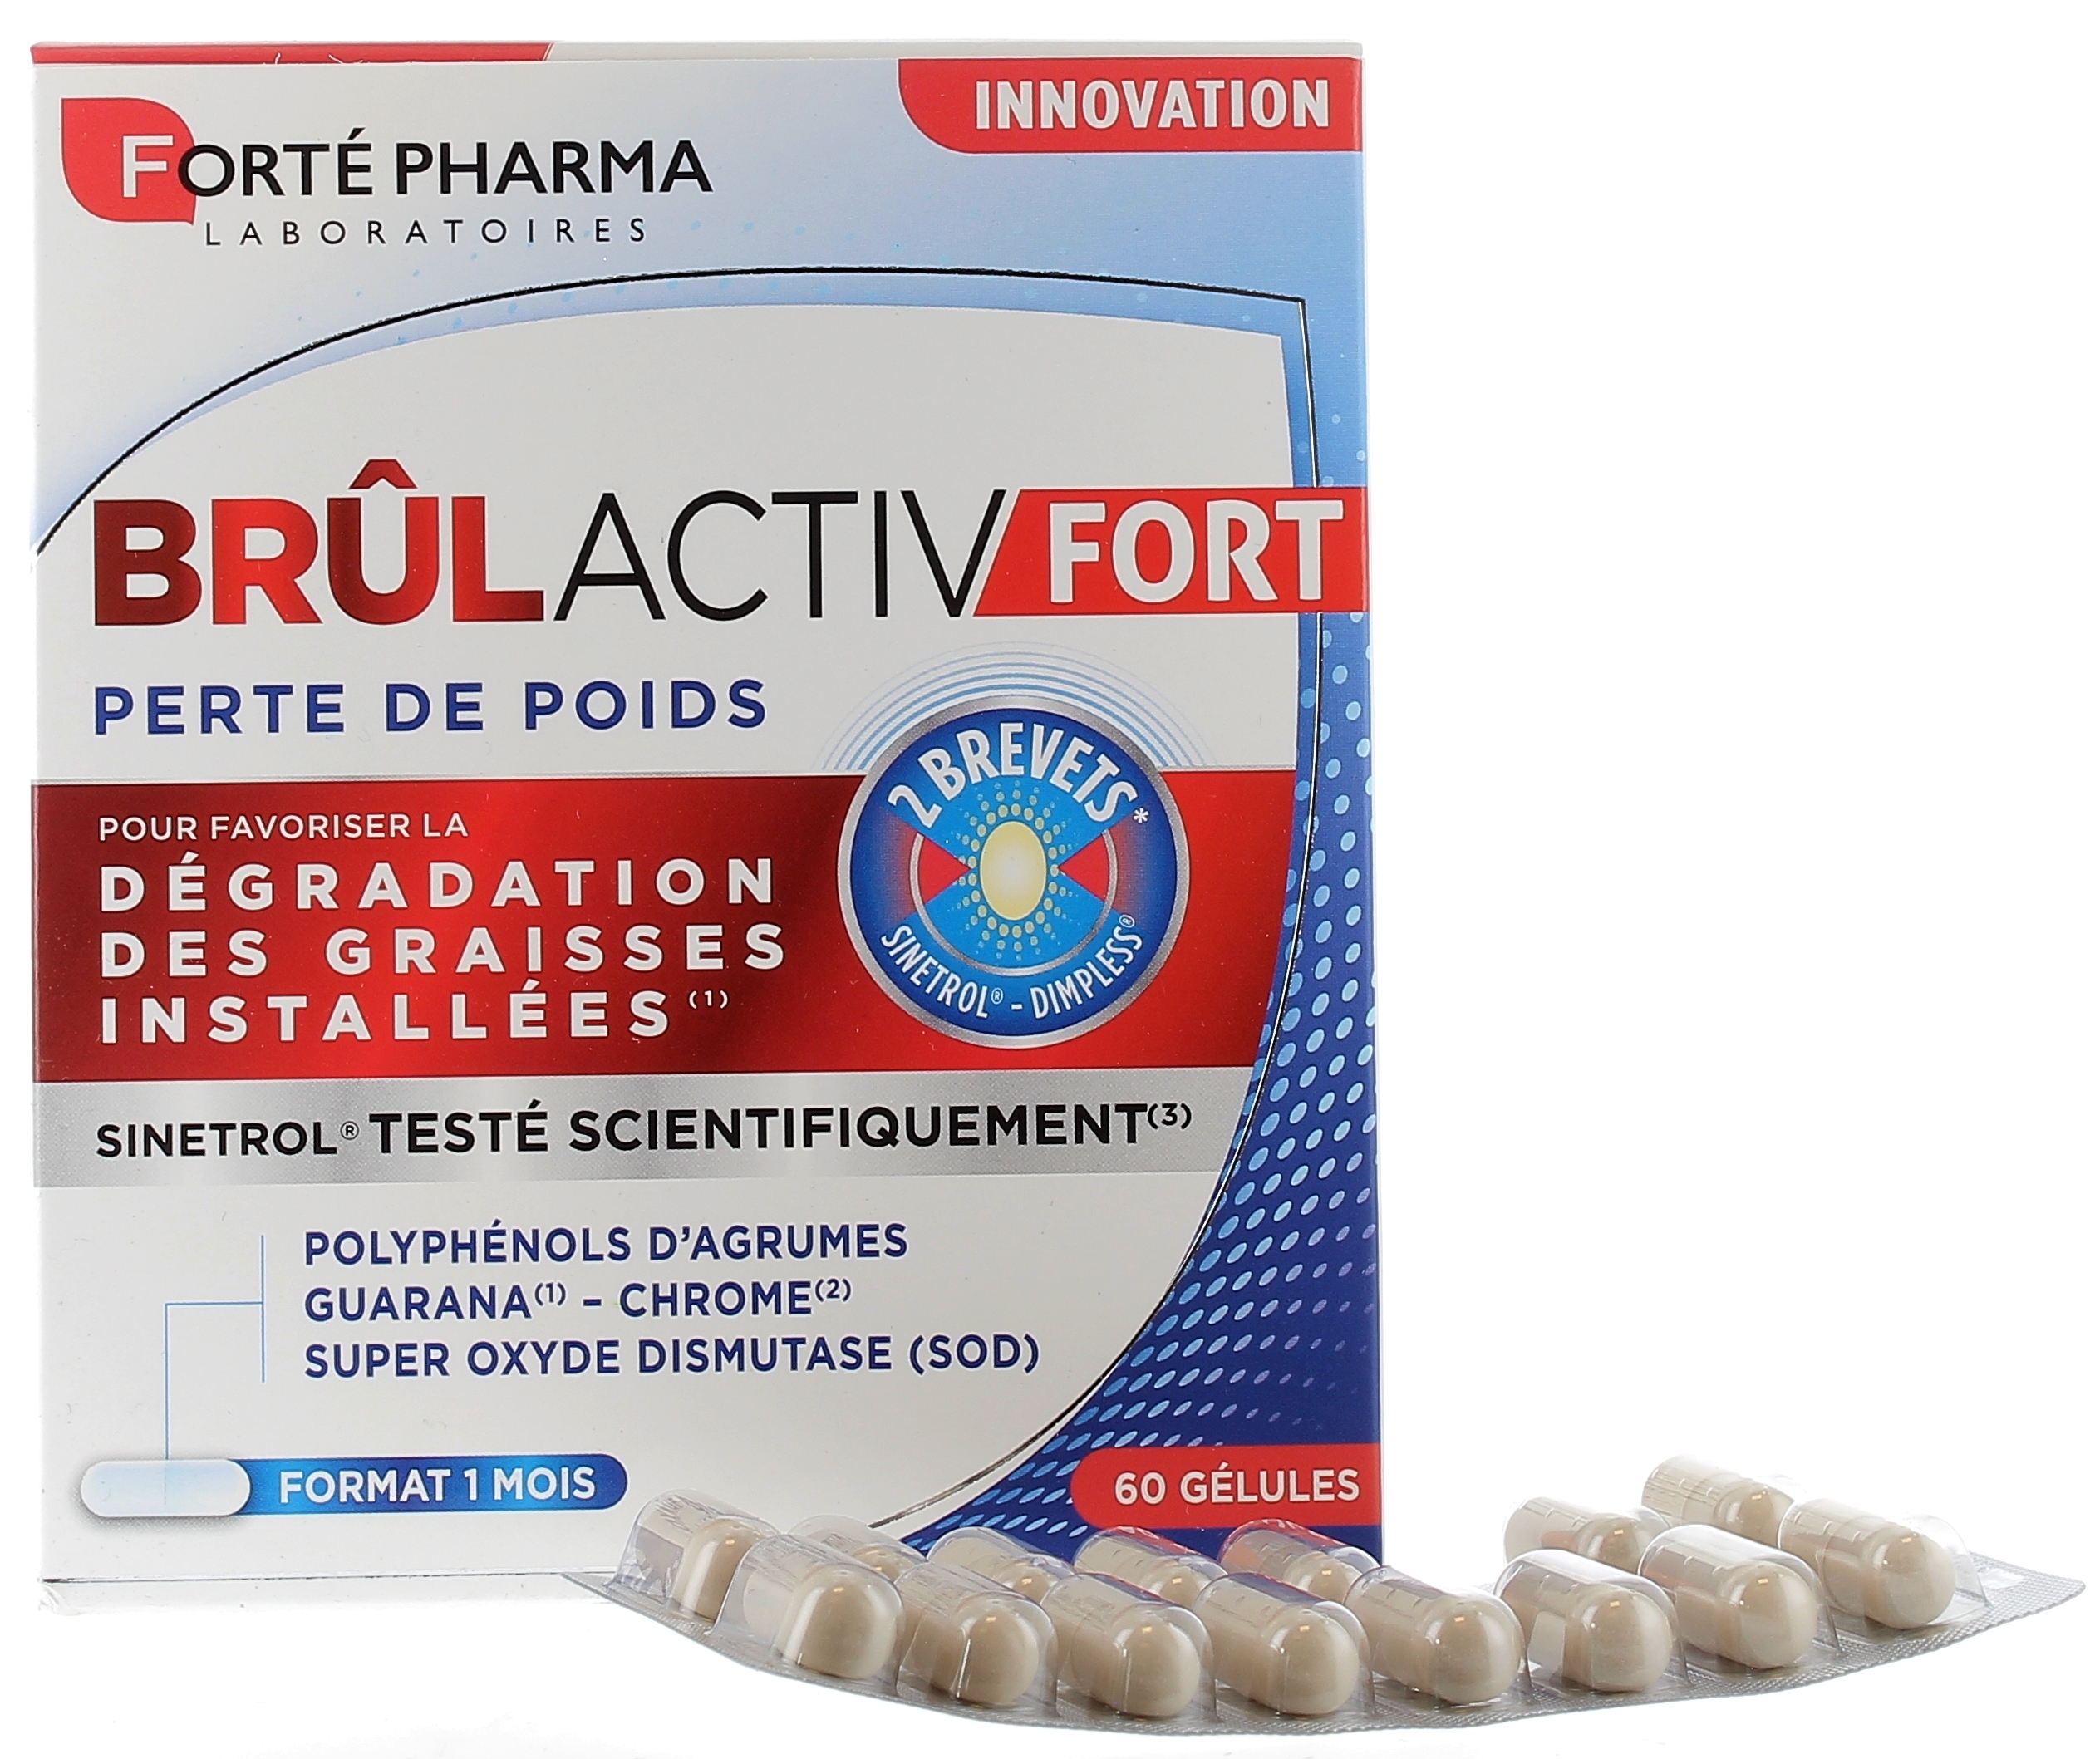 Forte Pharma BrûlActiv Fort - Perte de poids